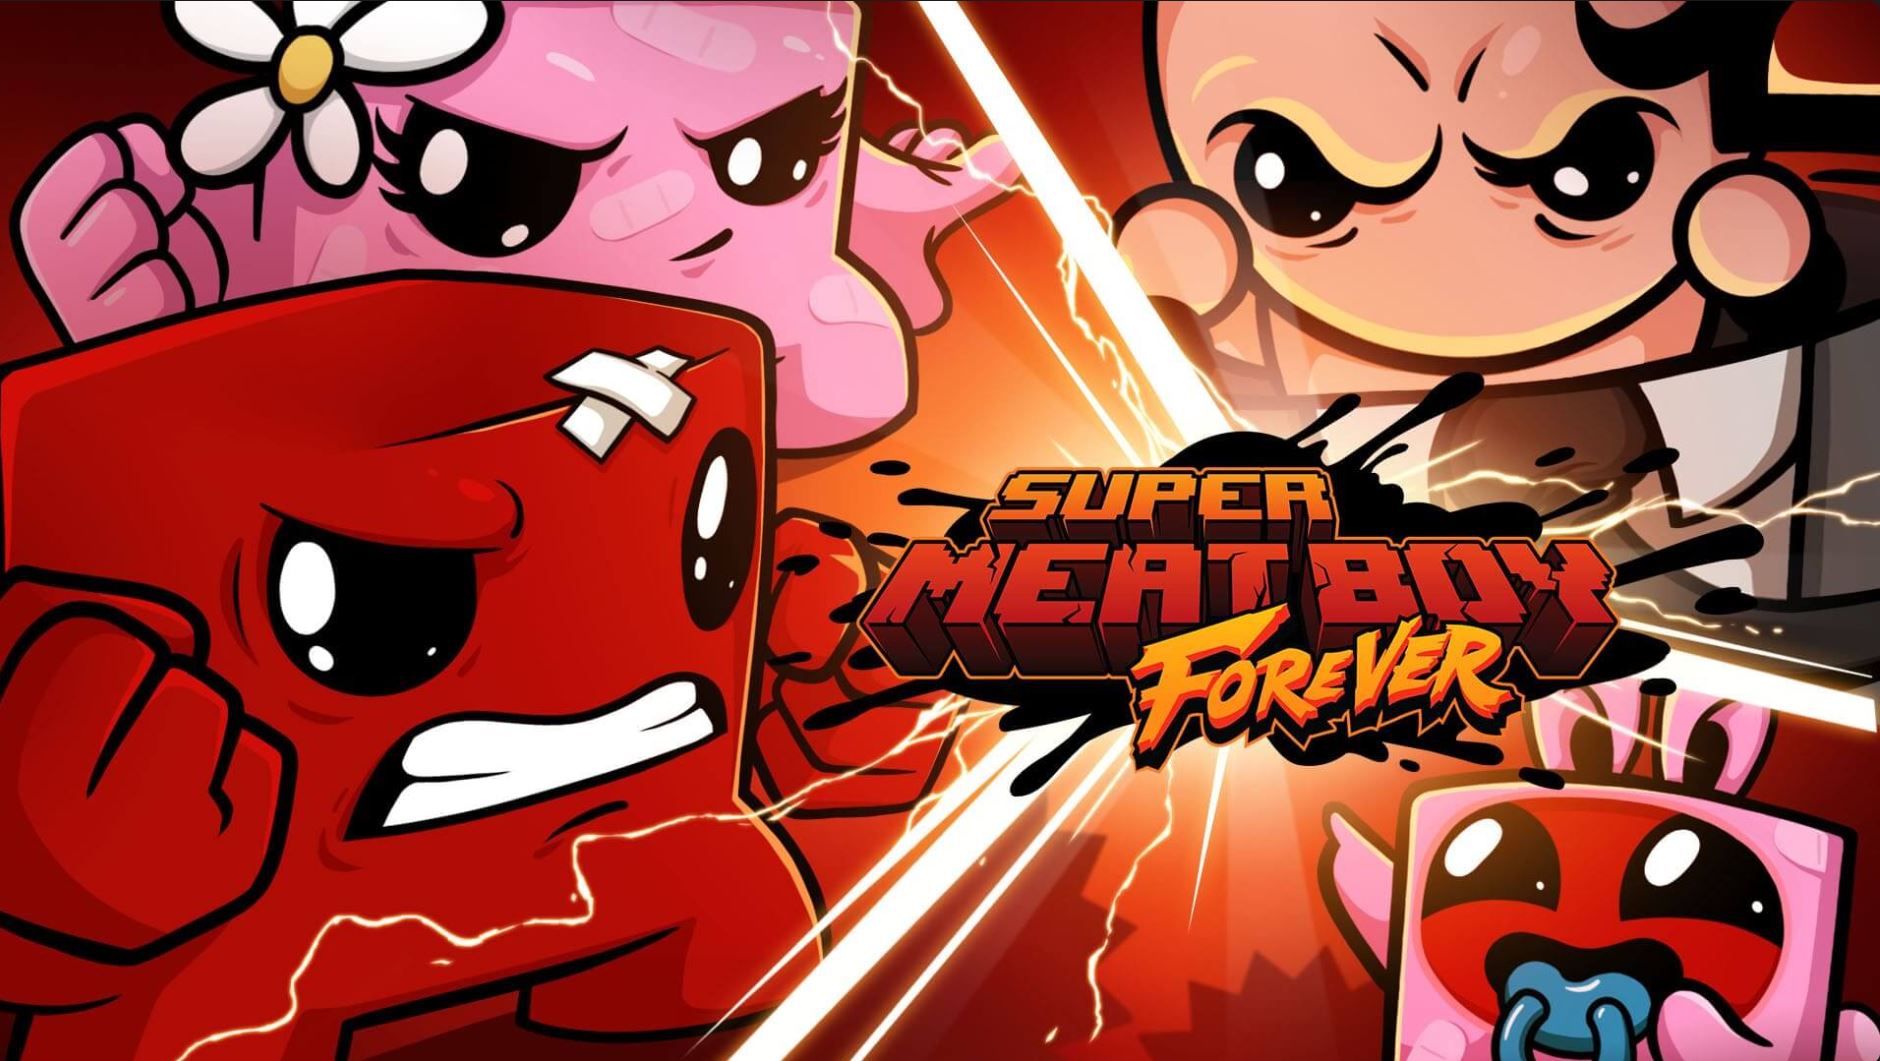 Super Meat Boy Forever dostępne za Darmo w Epic Games Store